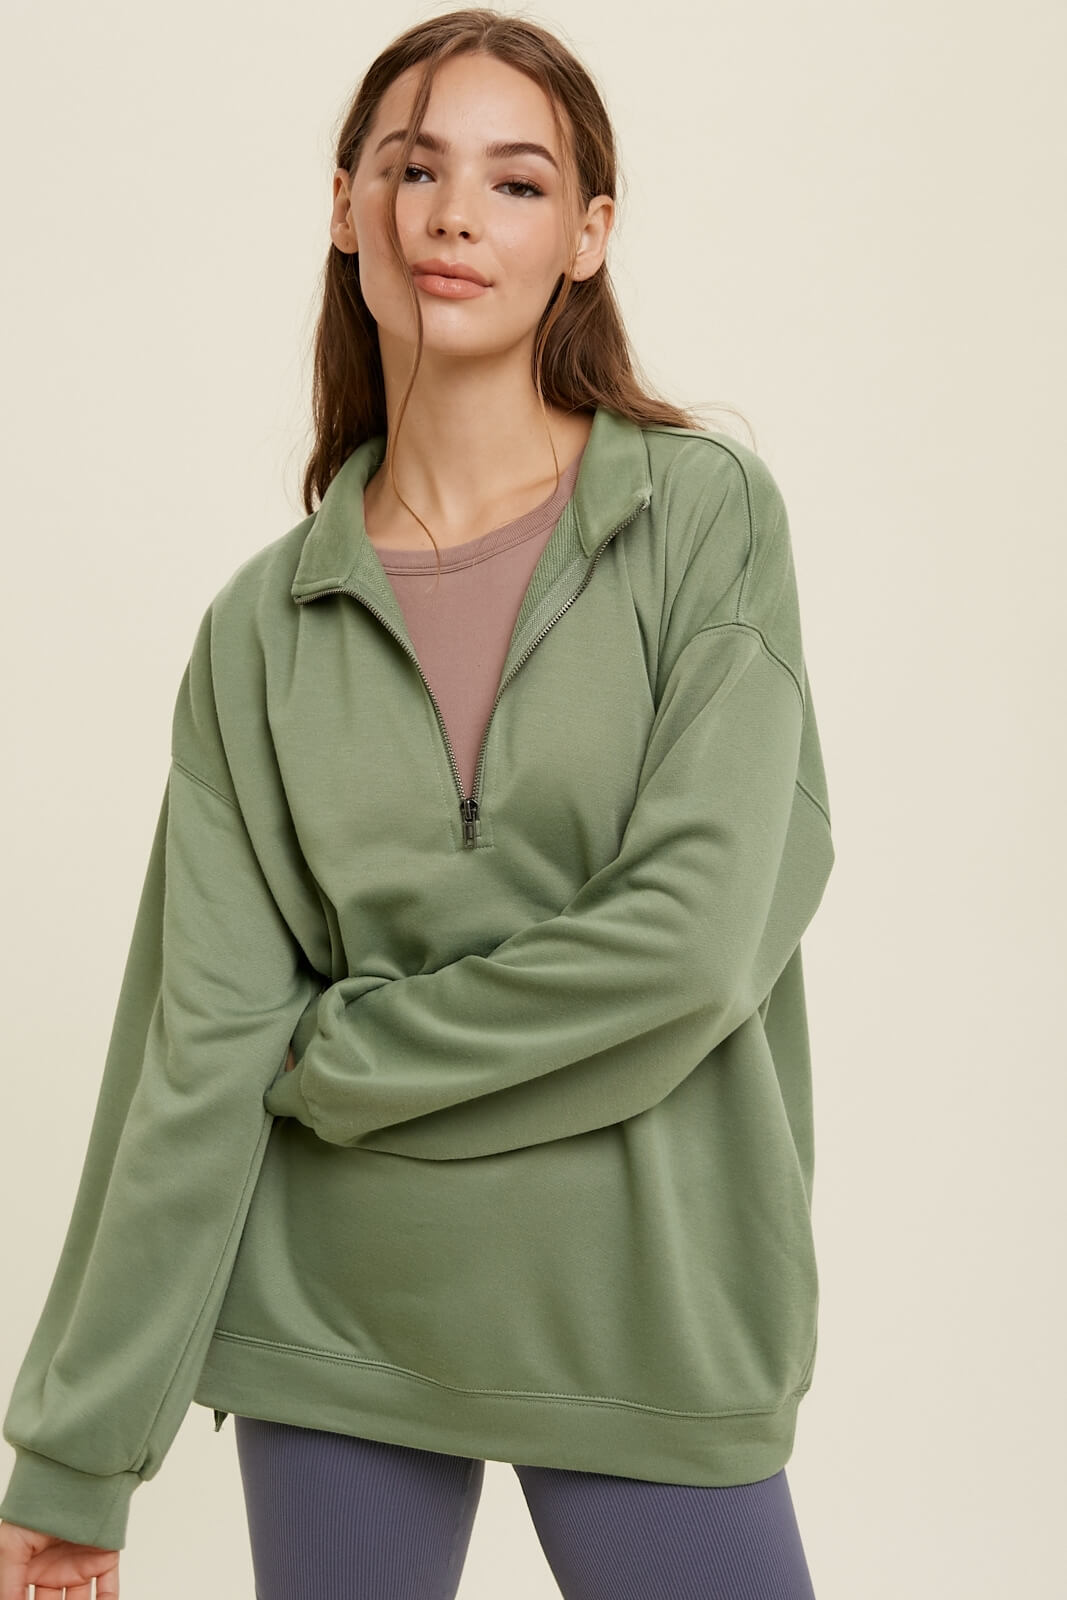 Half Zip Pocketed Green Pullover - Shirts & Tops